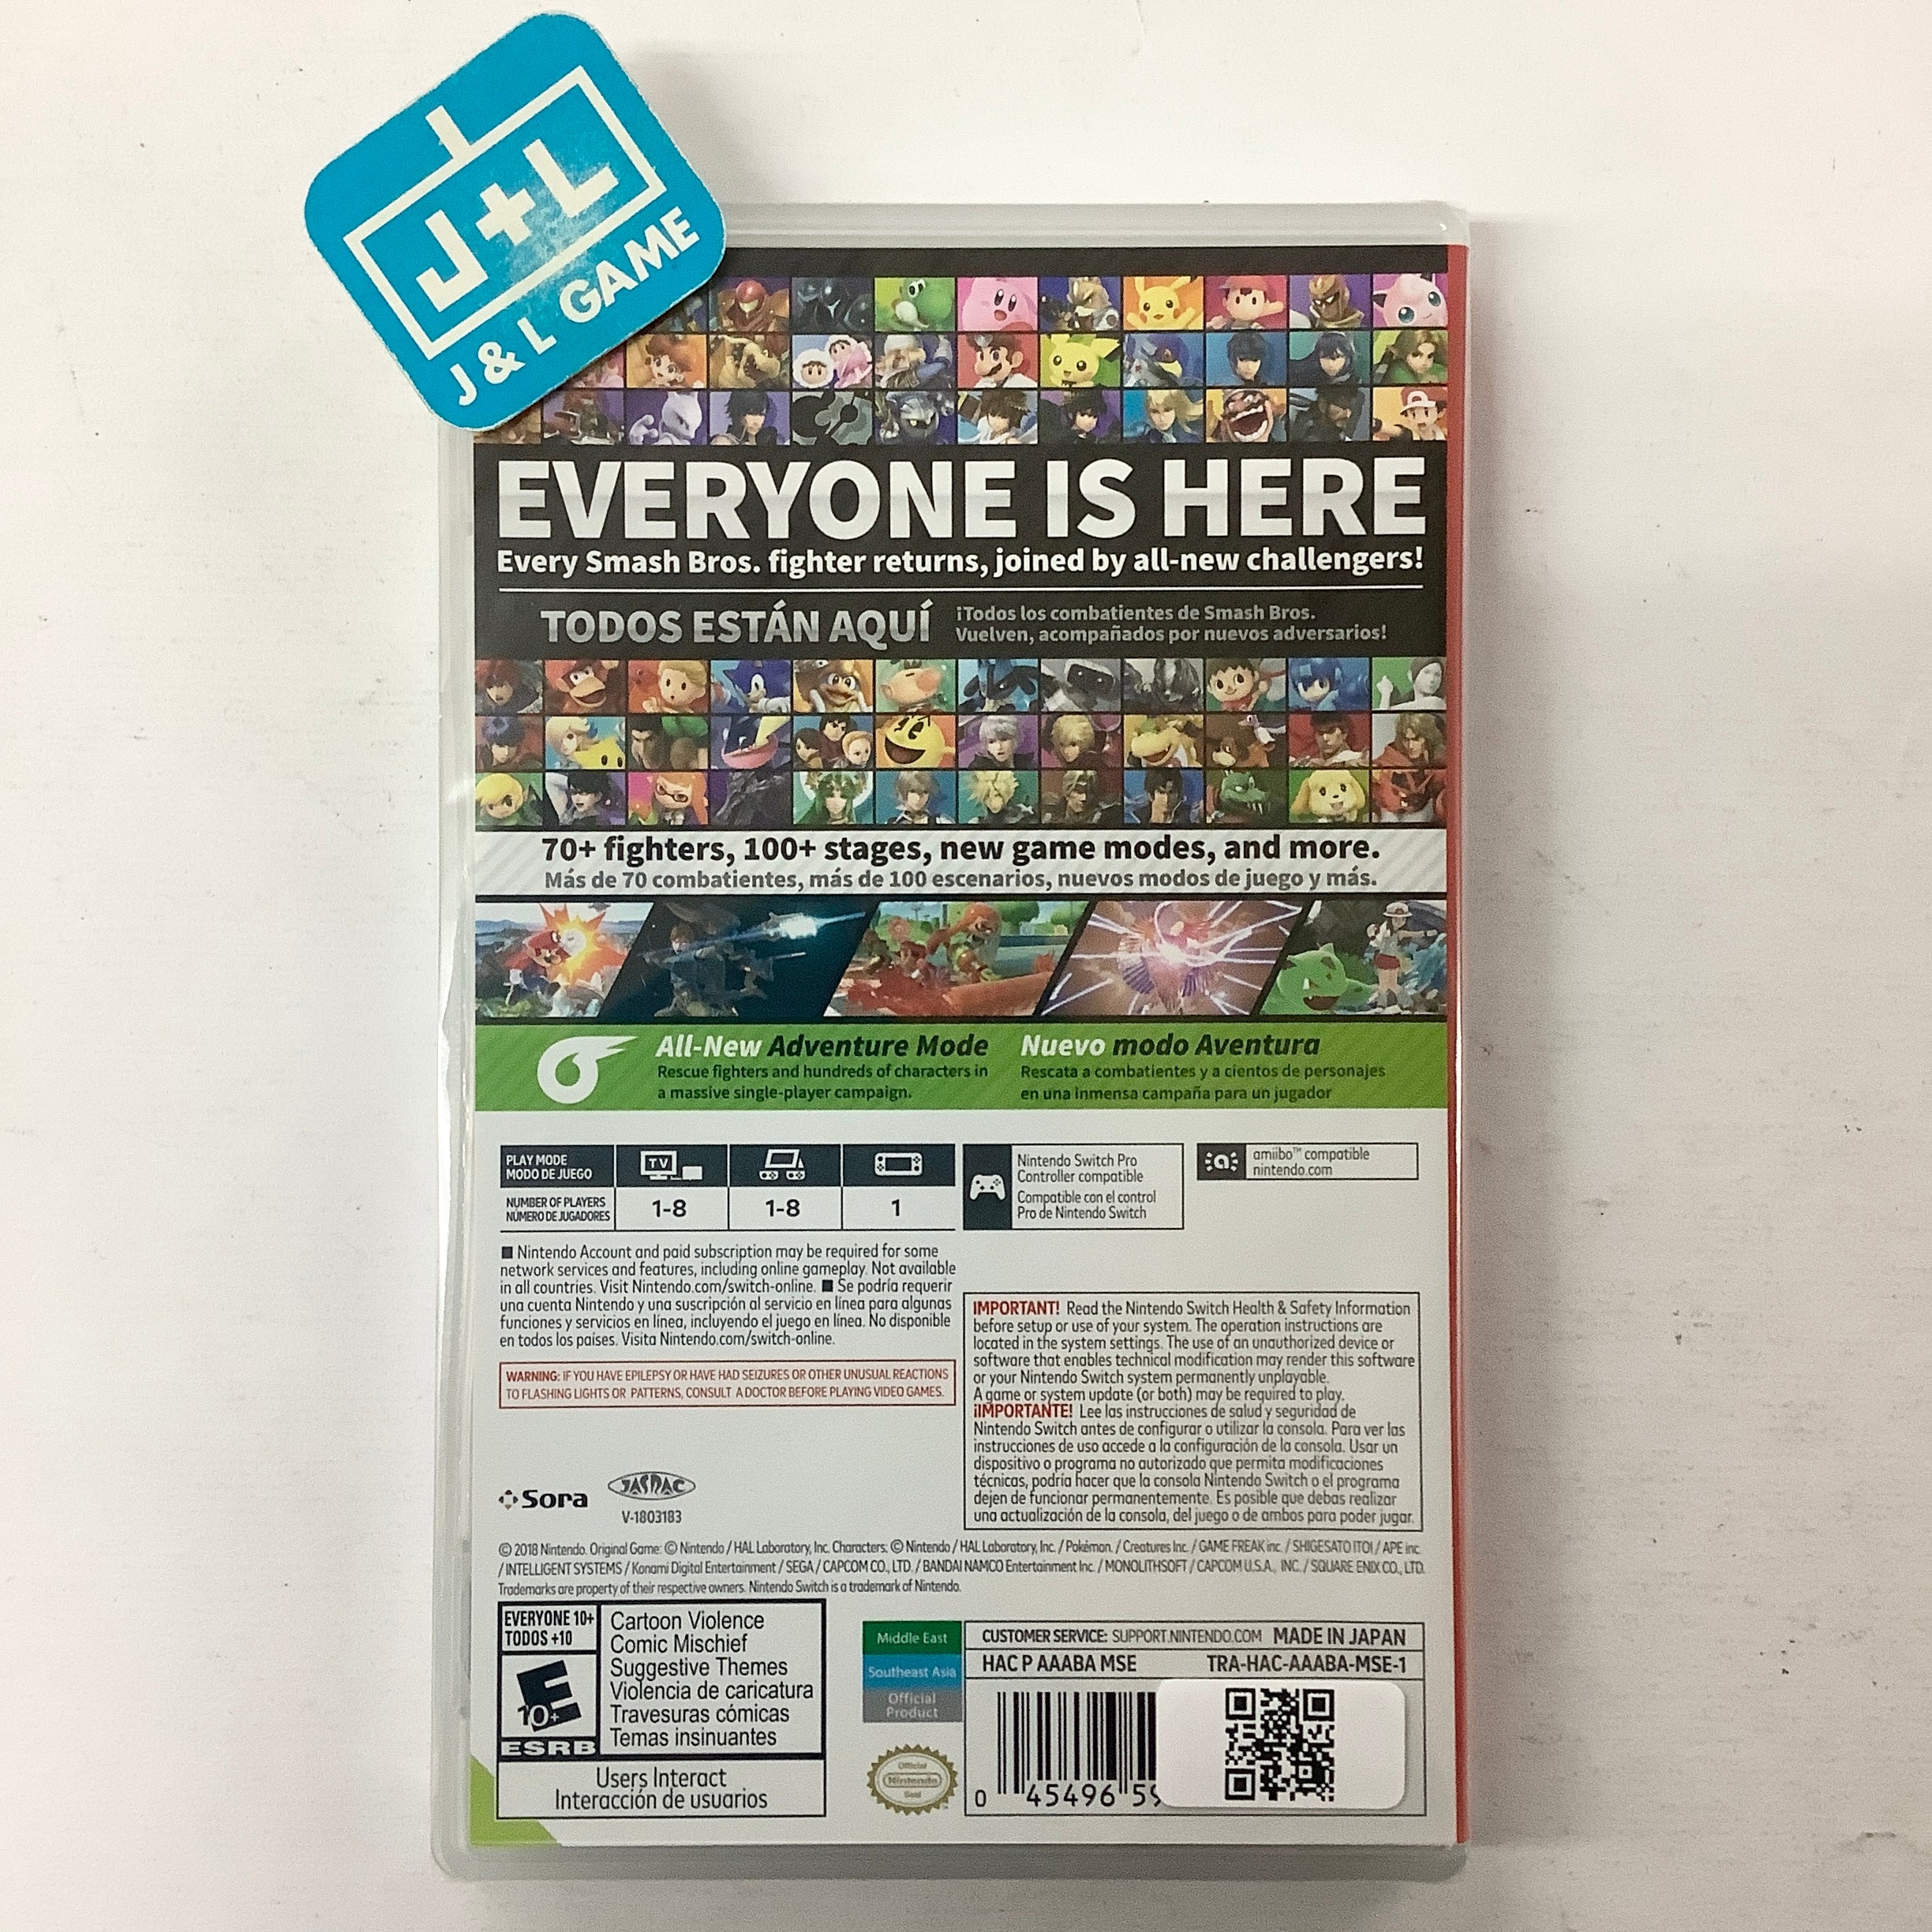 Super Smash Bros. Ultimate (World Edition) - (NSW) Nintendo Switch Video Games Nintendo   